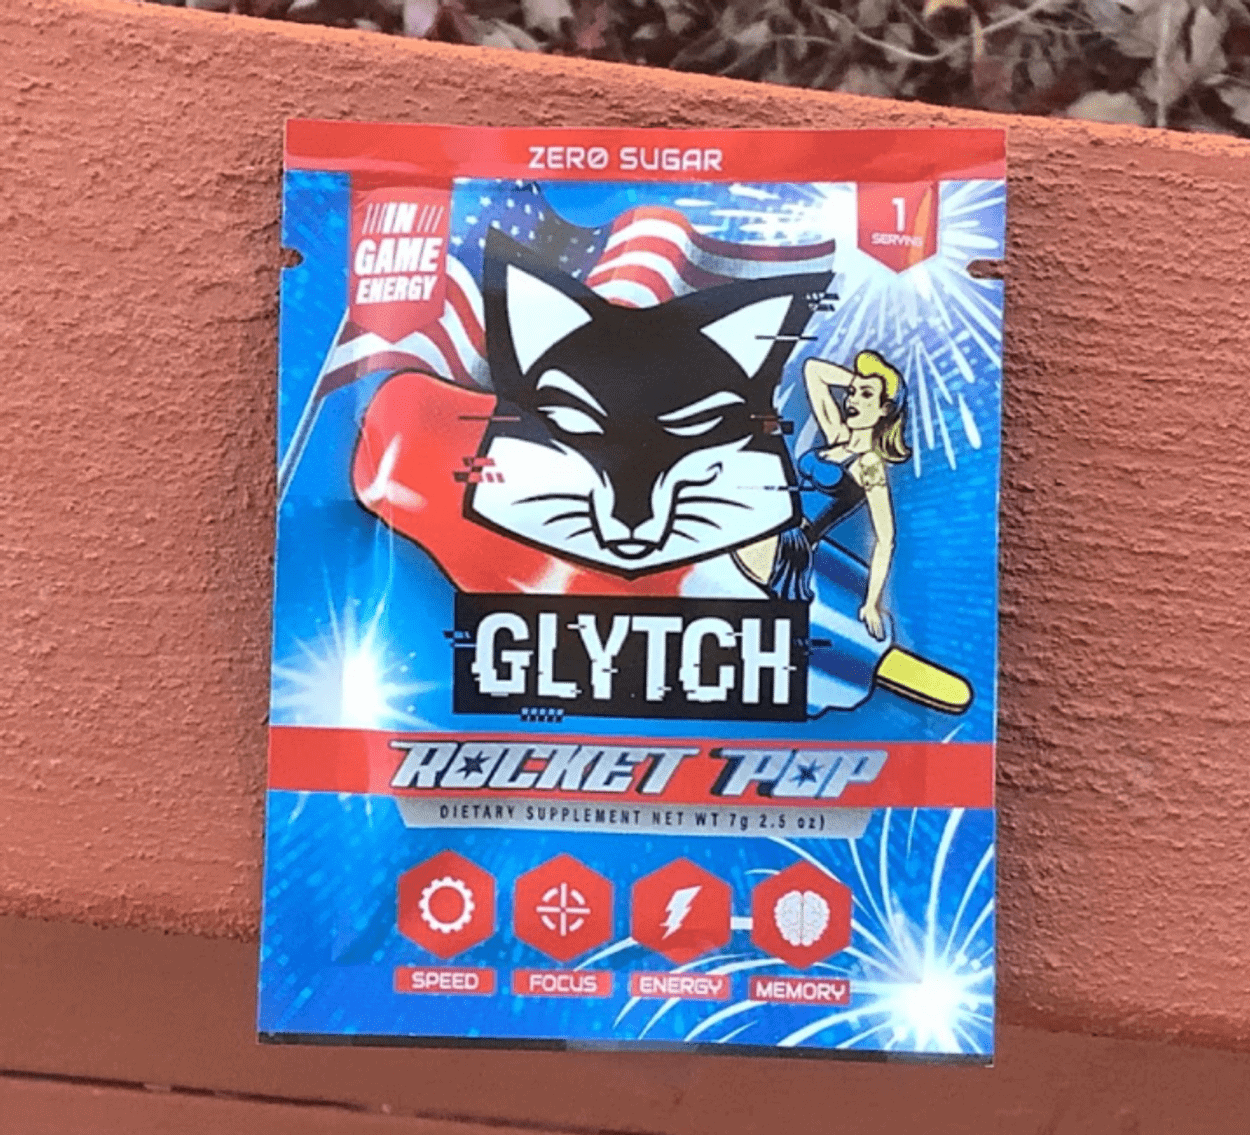 Rocket Pop flavor of Glytch Energy.